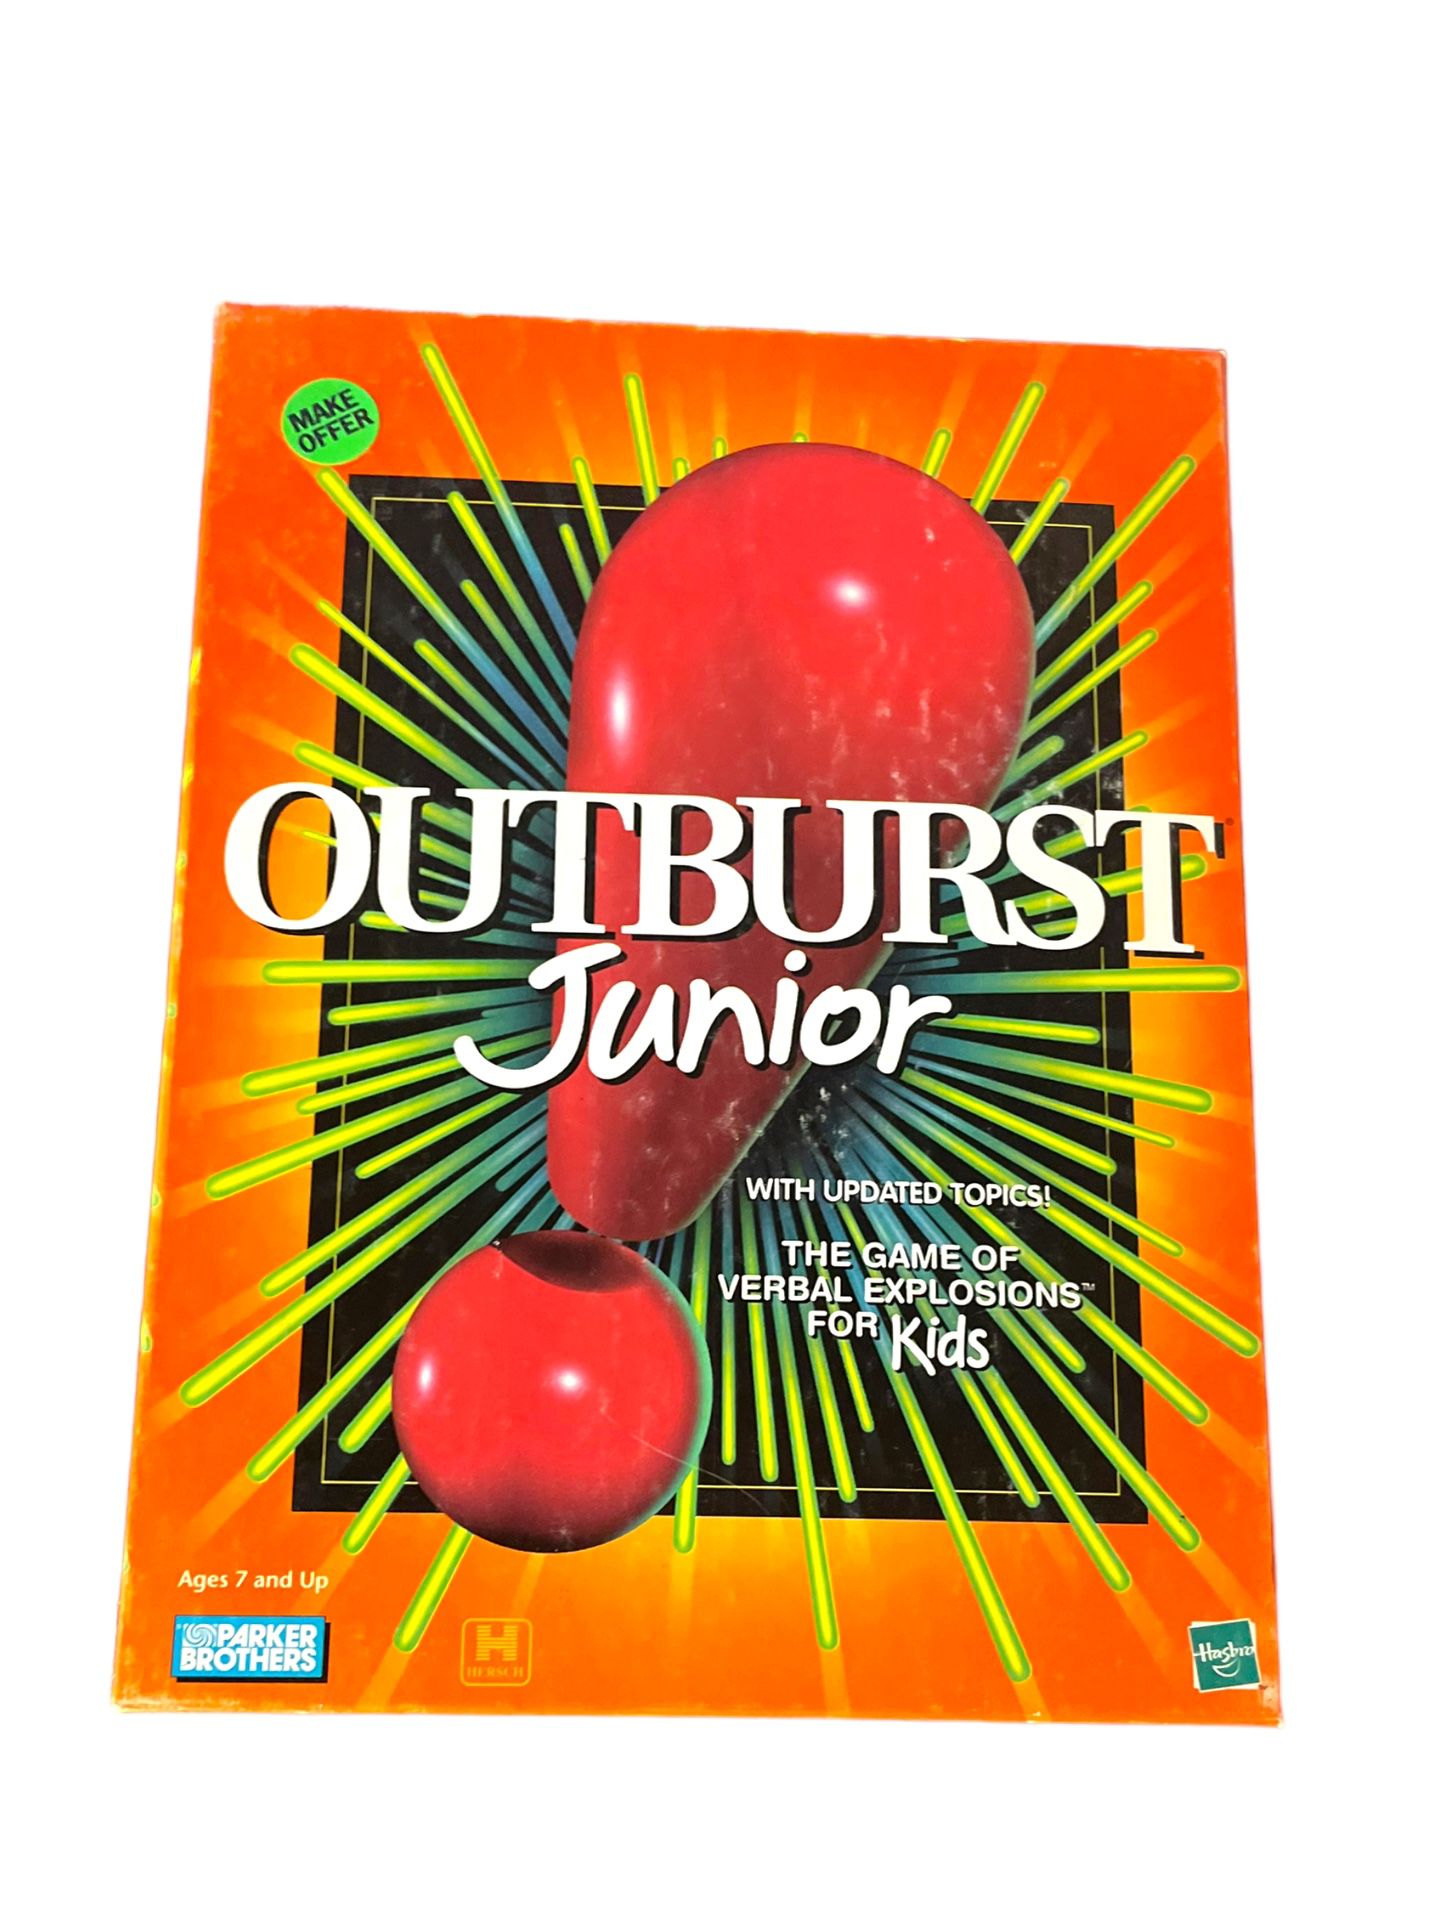 OUTBURST JUNIOR GAME VINTAGE